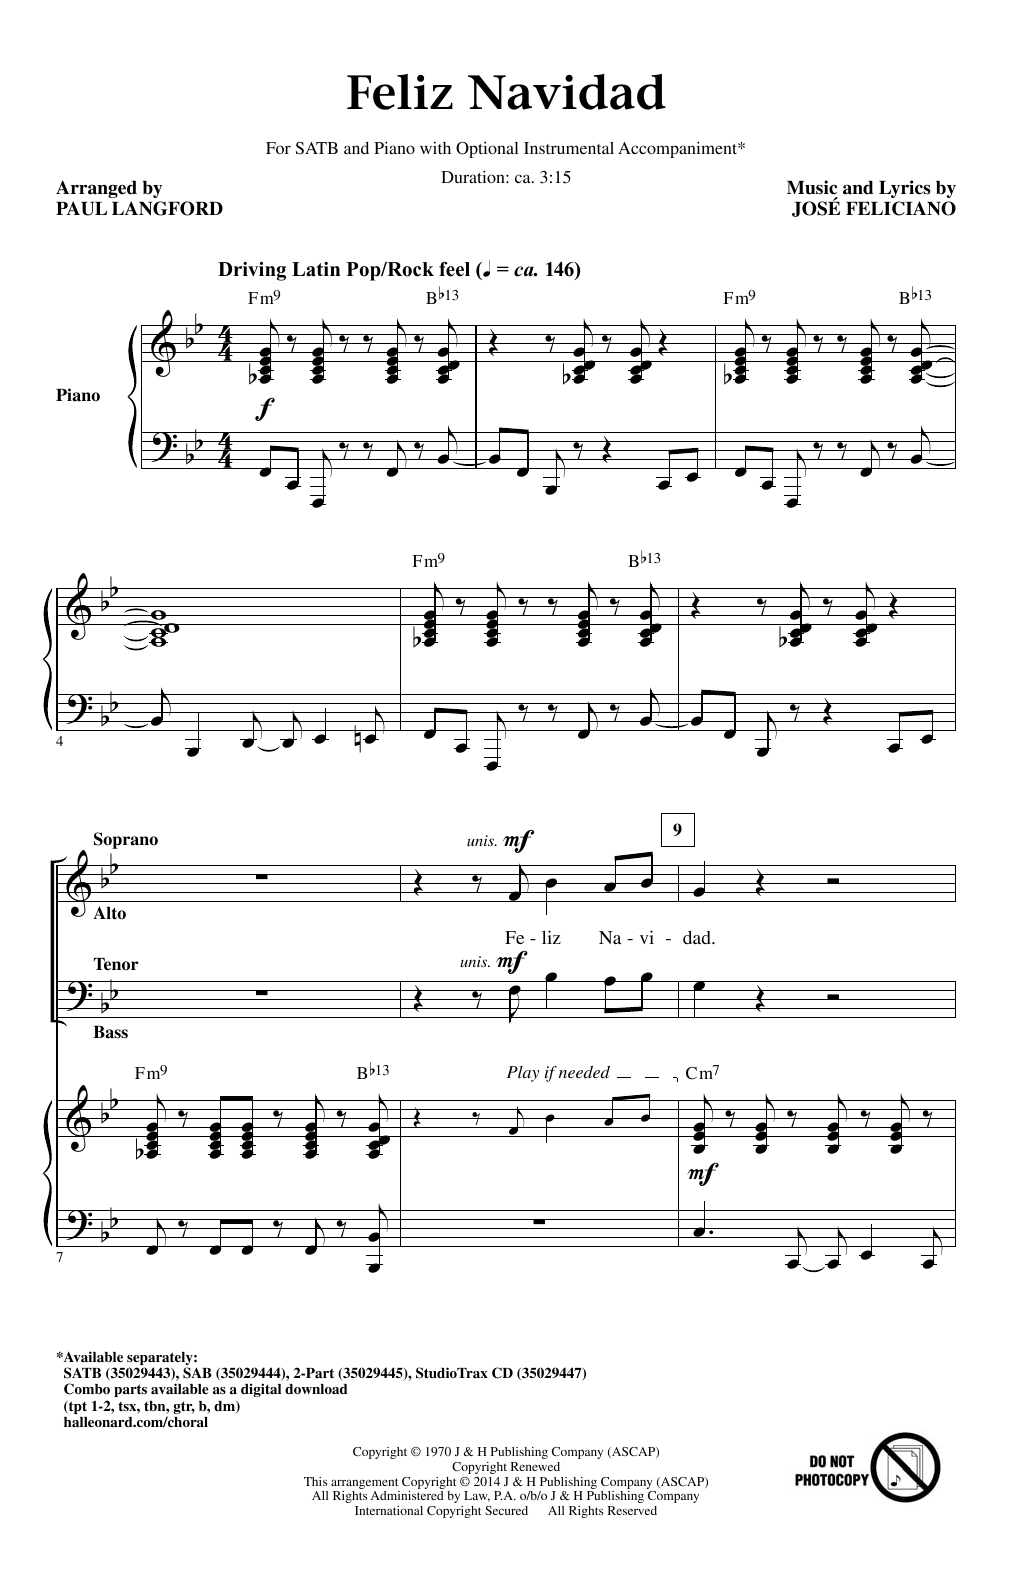 Jose Feliciano Feliz Navidad (arr. Paul Langford) Sheet Music Notes & Chords for SAB Choir - Download or Print PDF